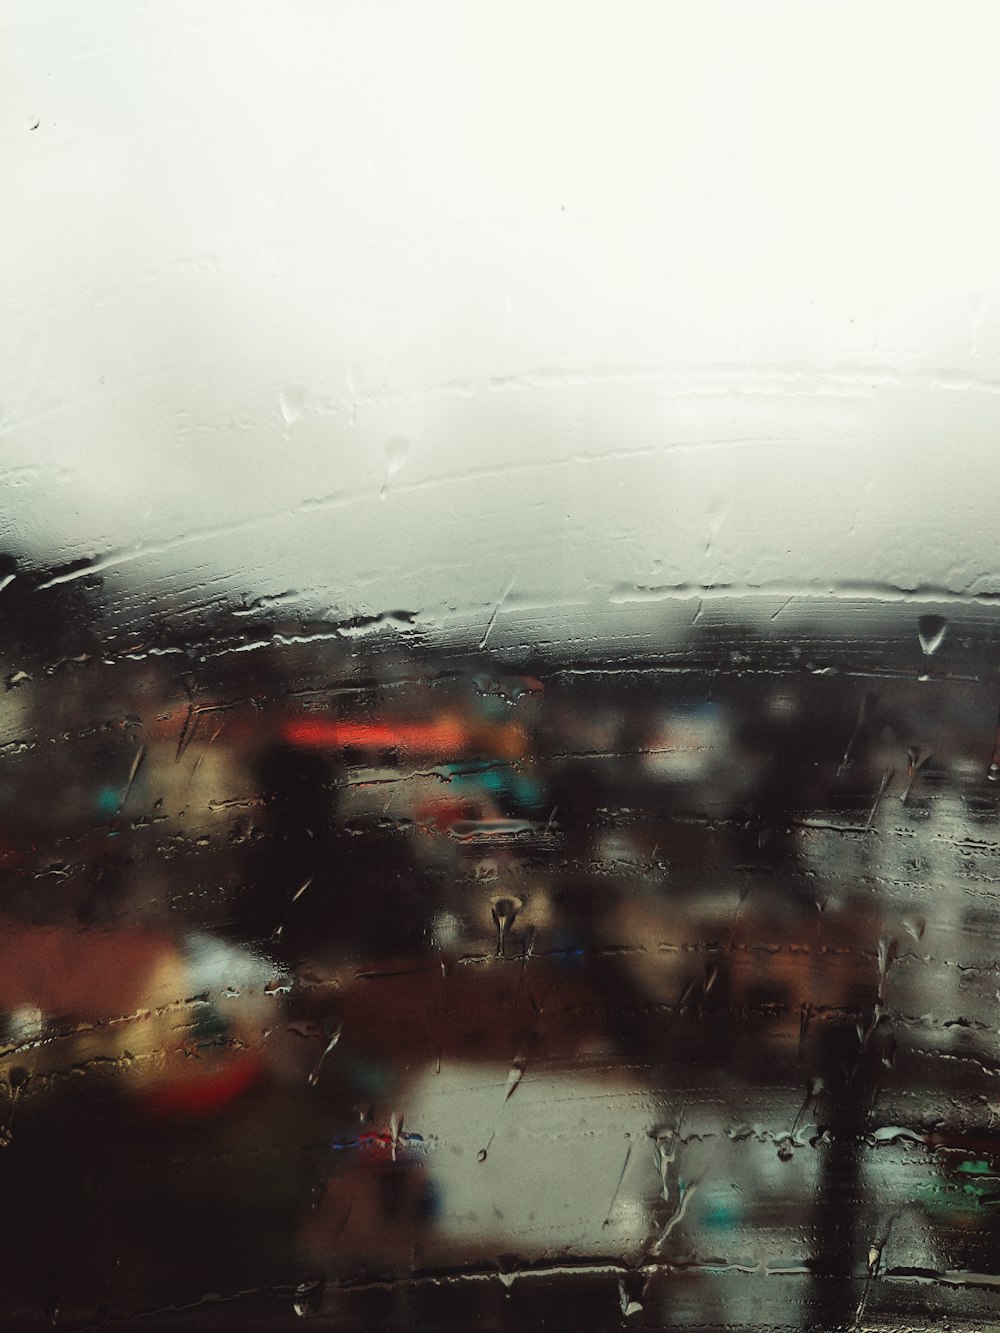 a window with rain on it